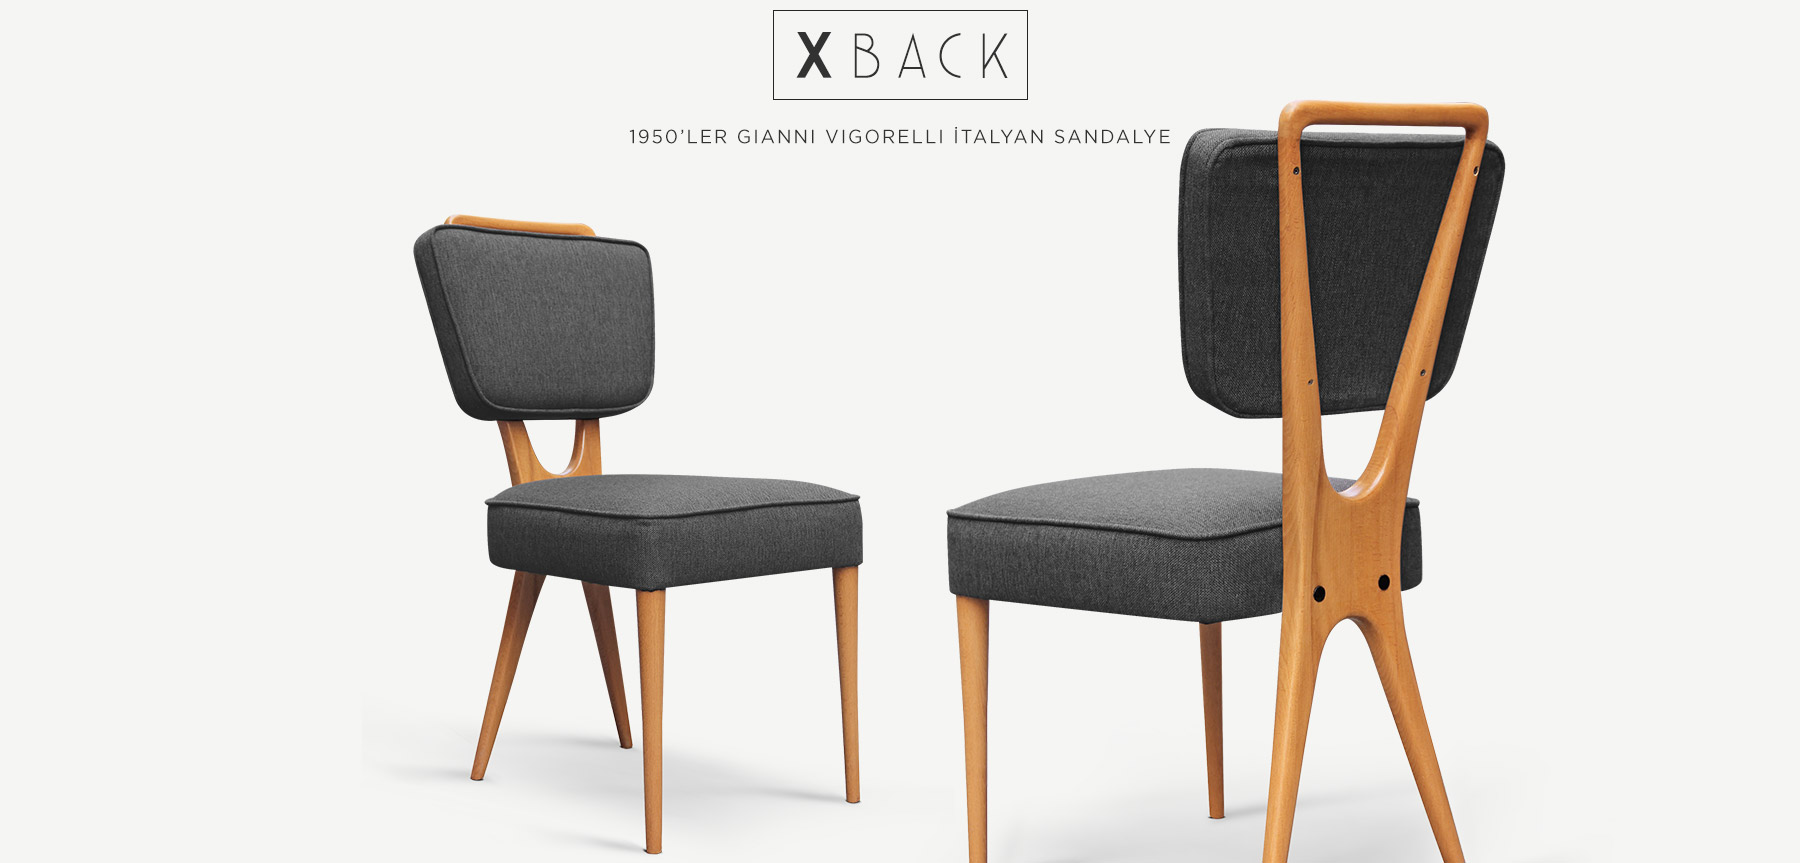 x-back gri italyan ahşap sandalye'in resmi